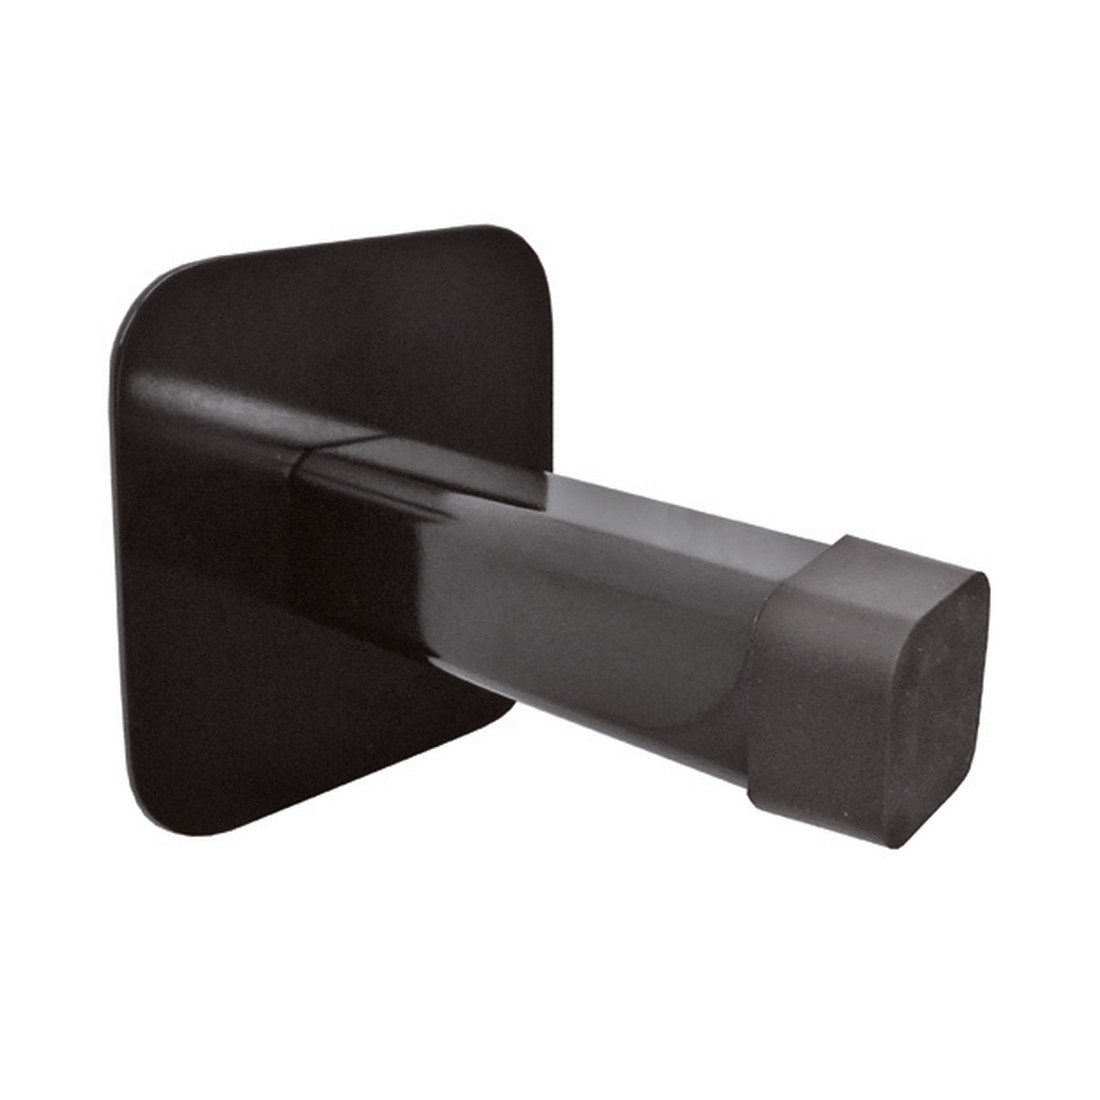 Door stopper, black, angular, 16/16mm, wall plate 40/40mm, theft hinder